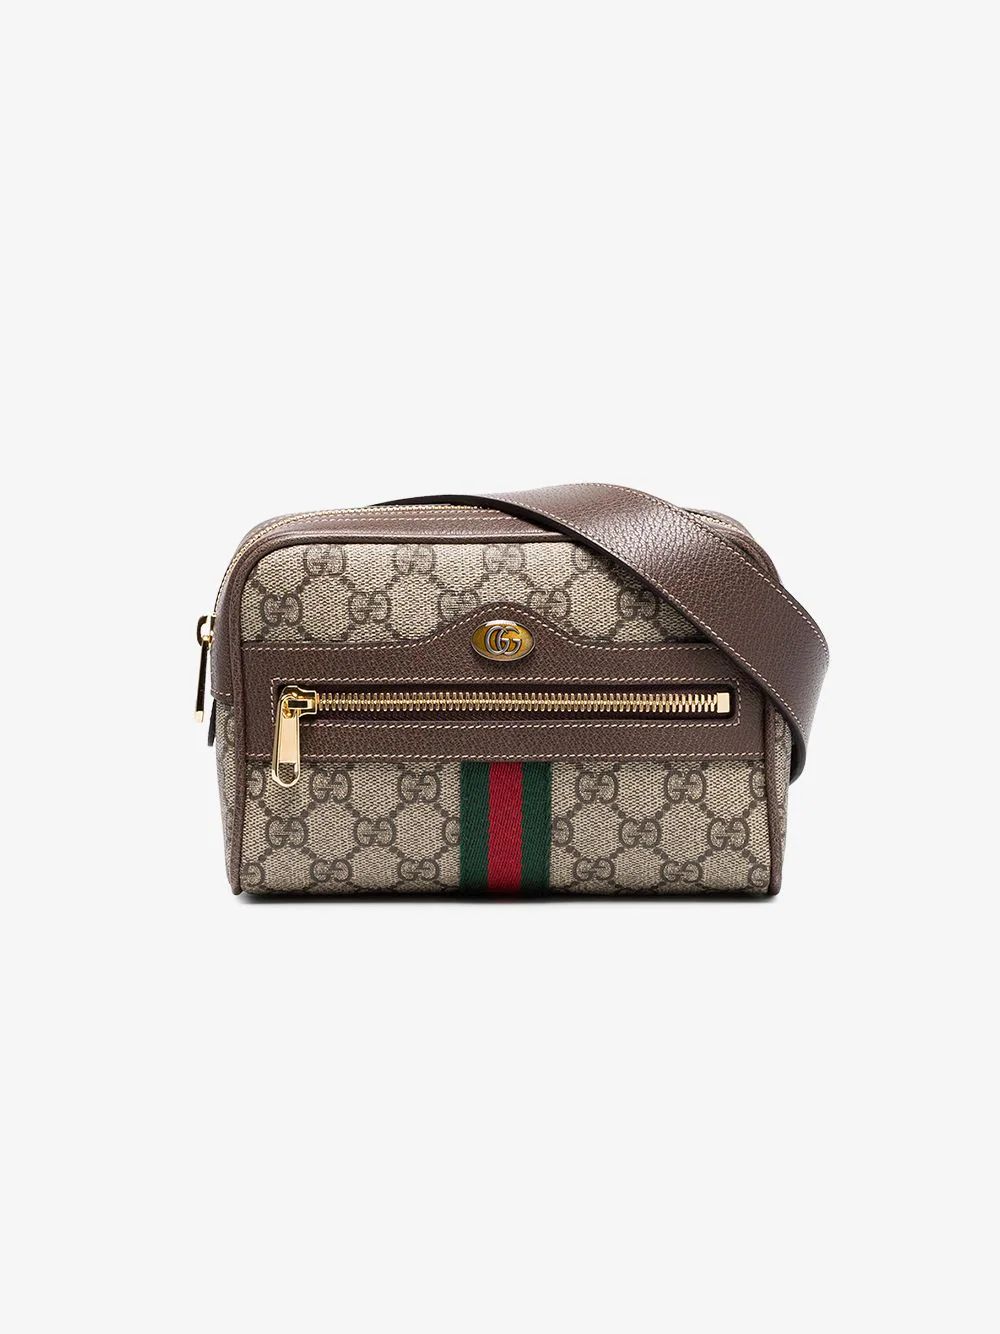 Gucci Ophidia GG Supreme small belt bag | Browns Fashion